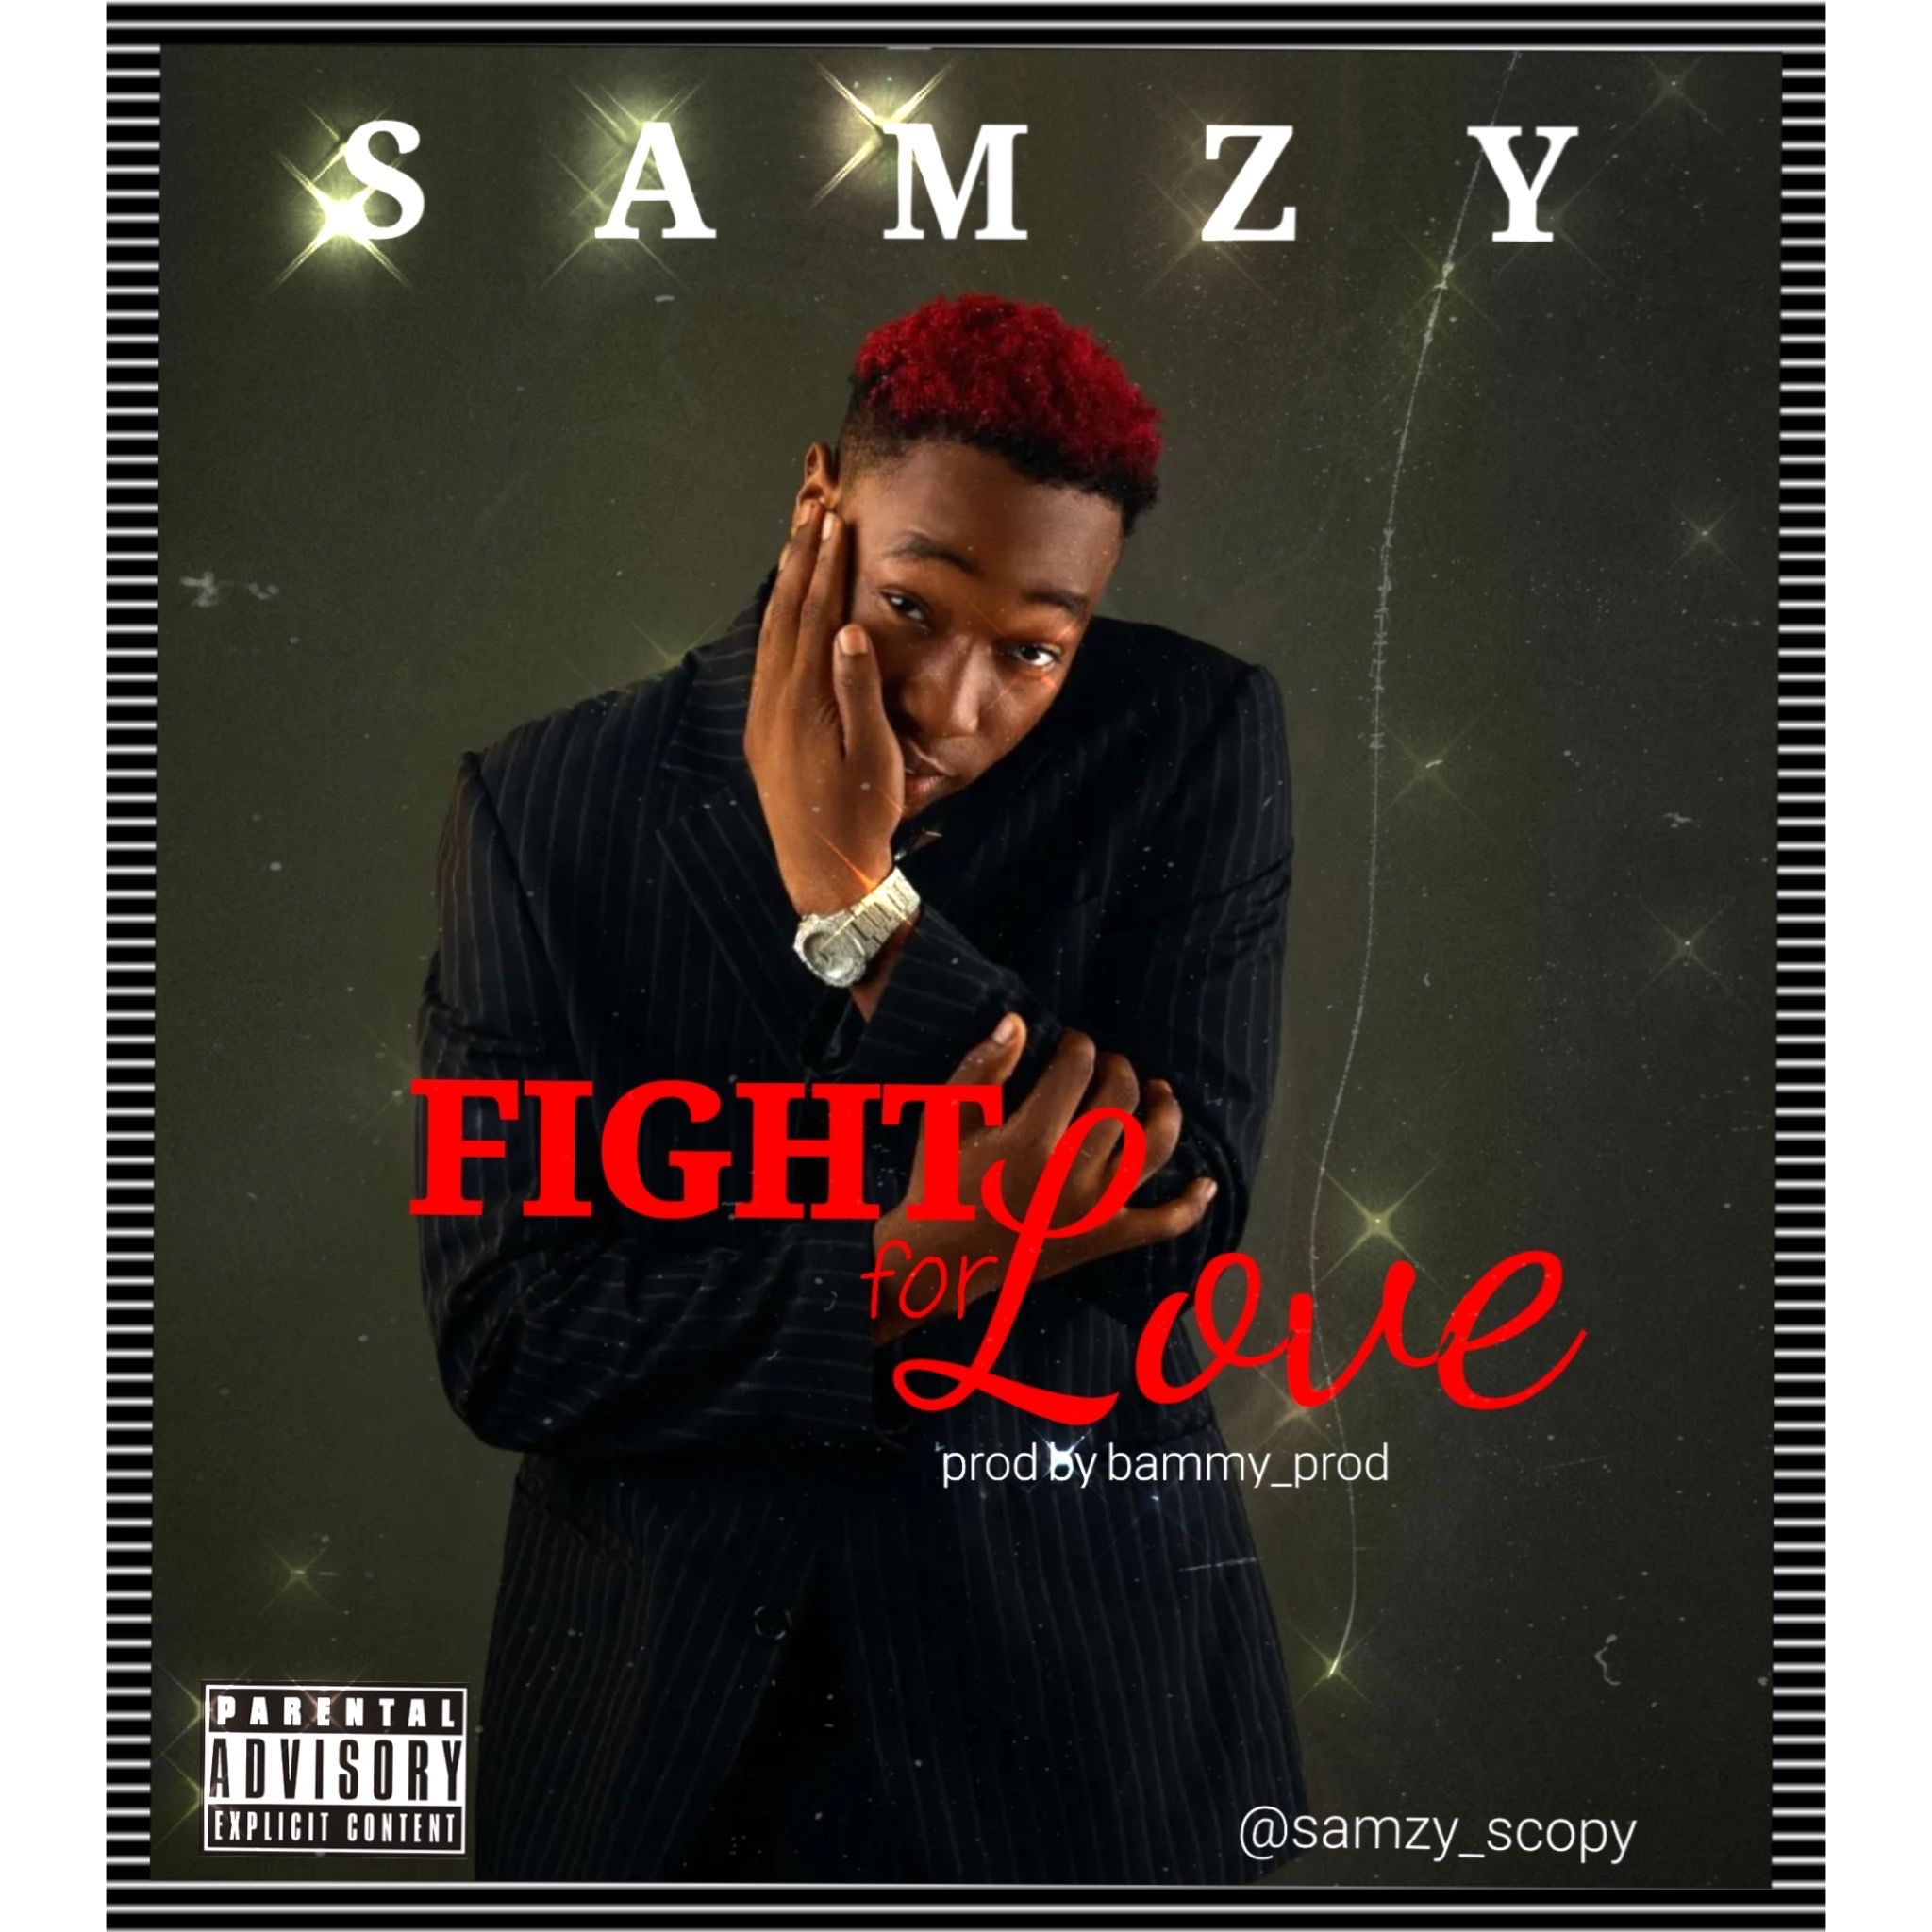 Samzy scopy - Fight for love